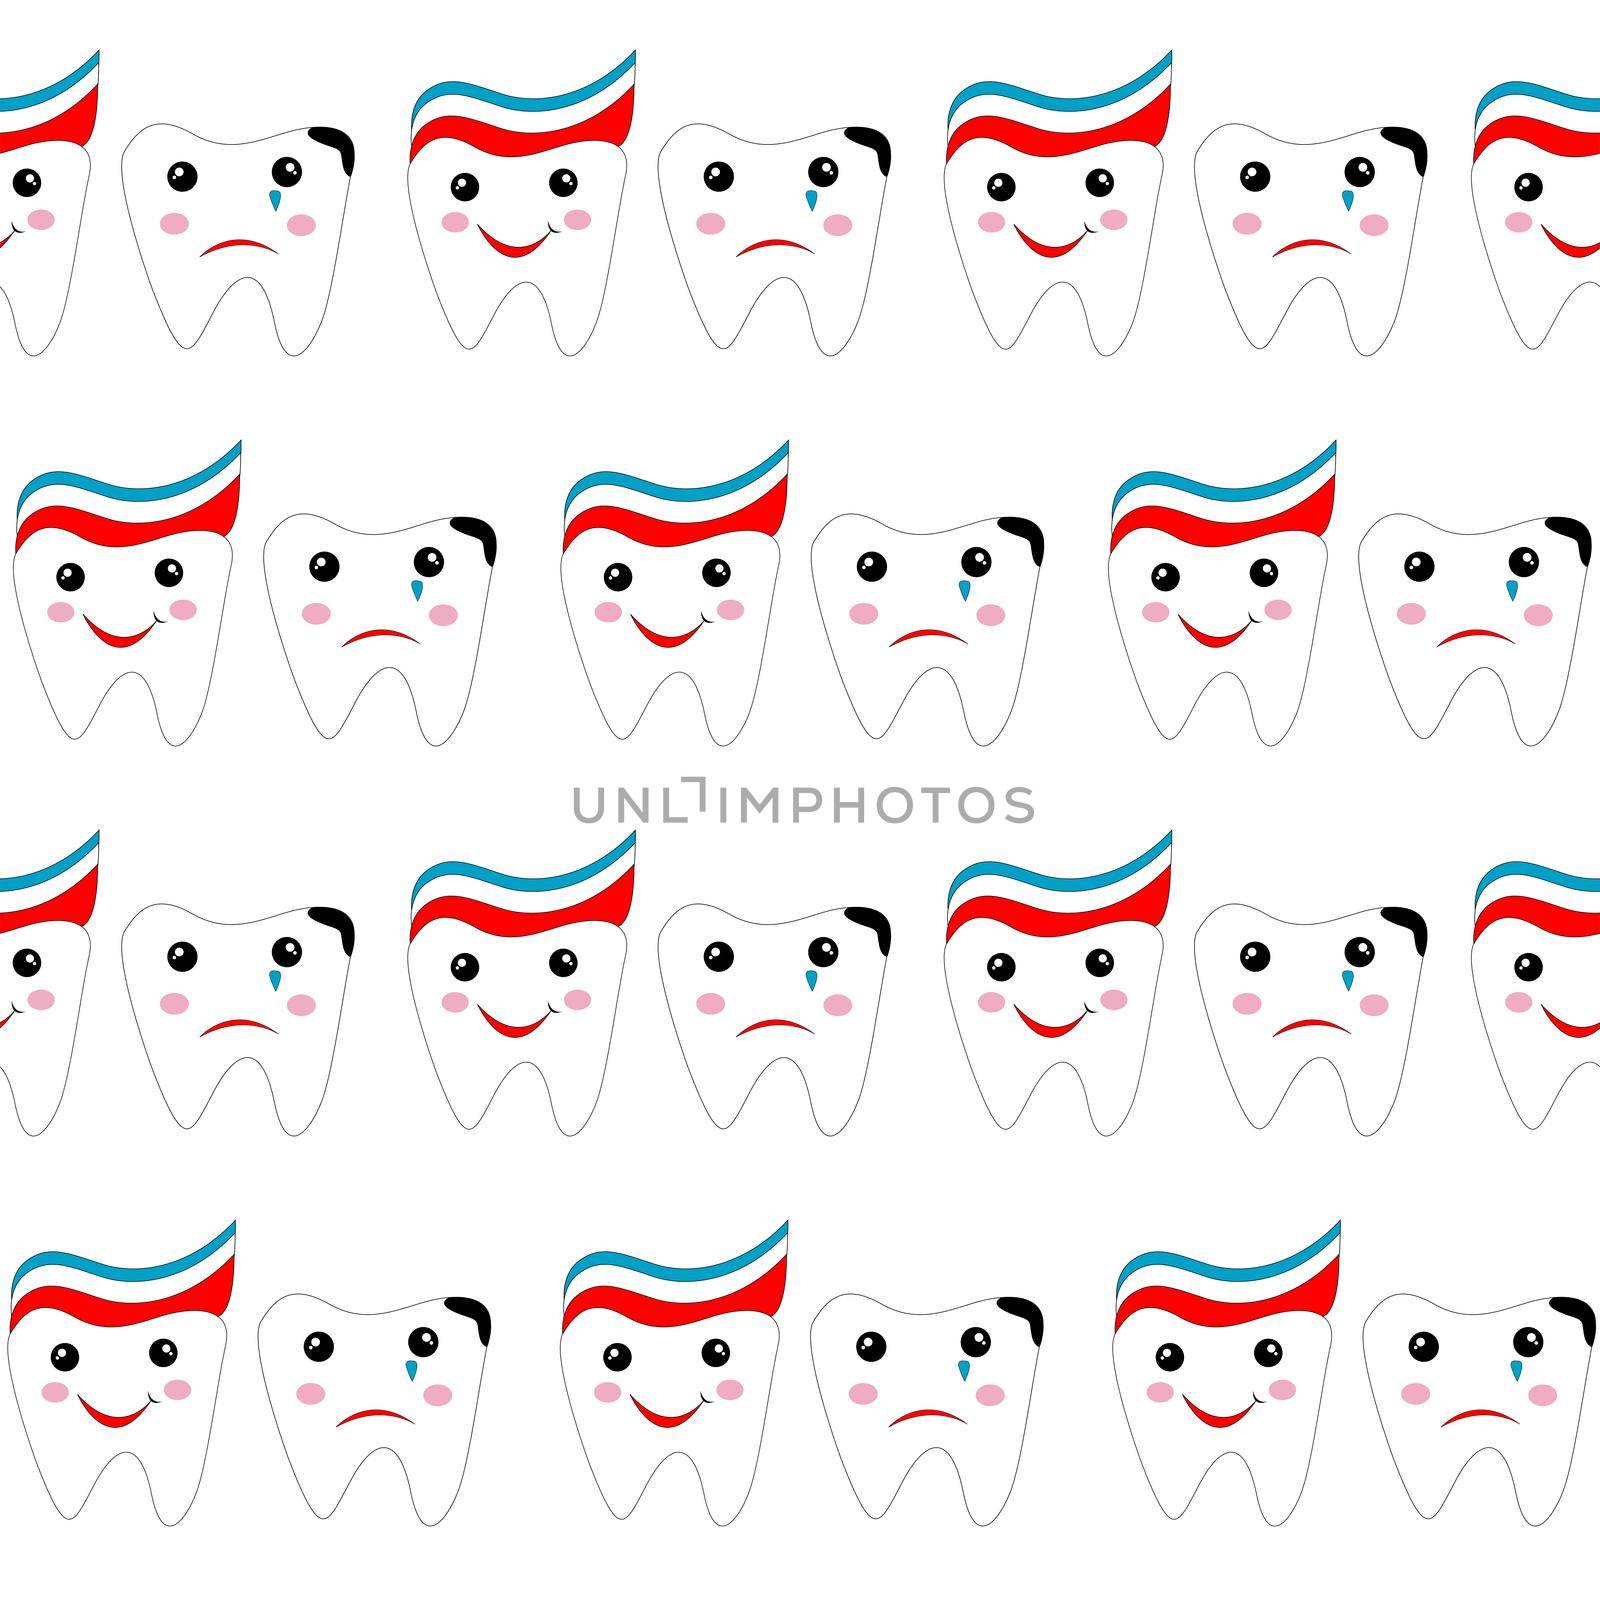 Smiling and upset cartoon teeth seamless pattern